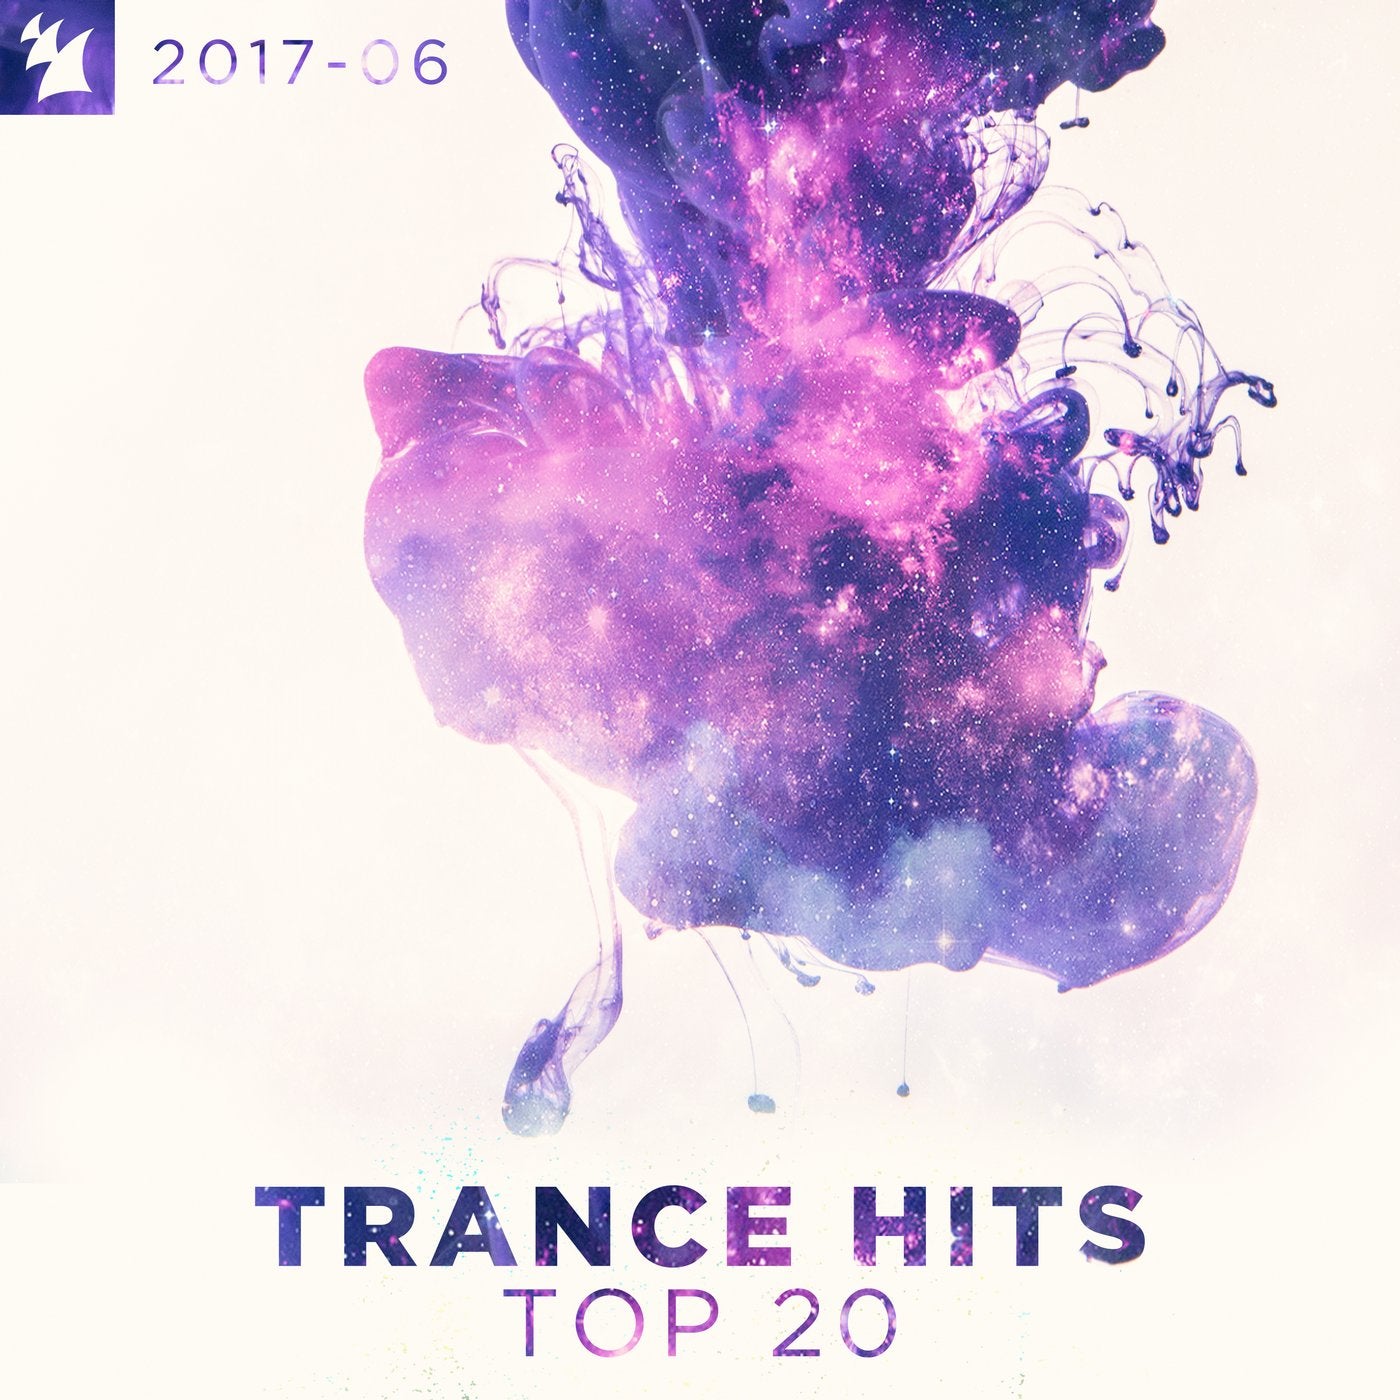 Trance Hits. Leroy Moreno album. Trance Hits Top 20 - 2017-02. Mark Sherry - gravitational Waves (Systembreaker Remix). Things original mix